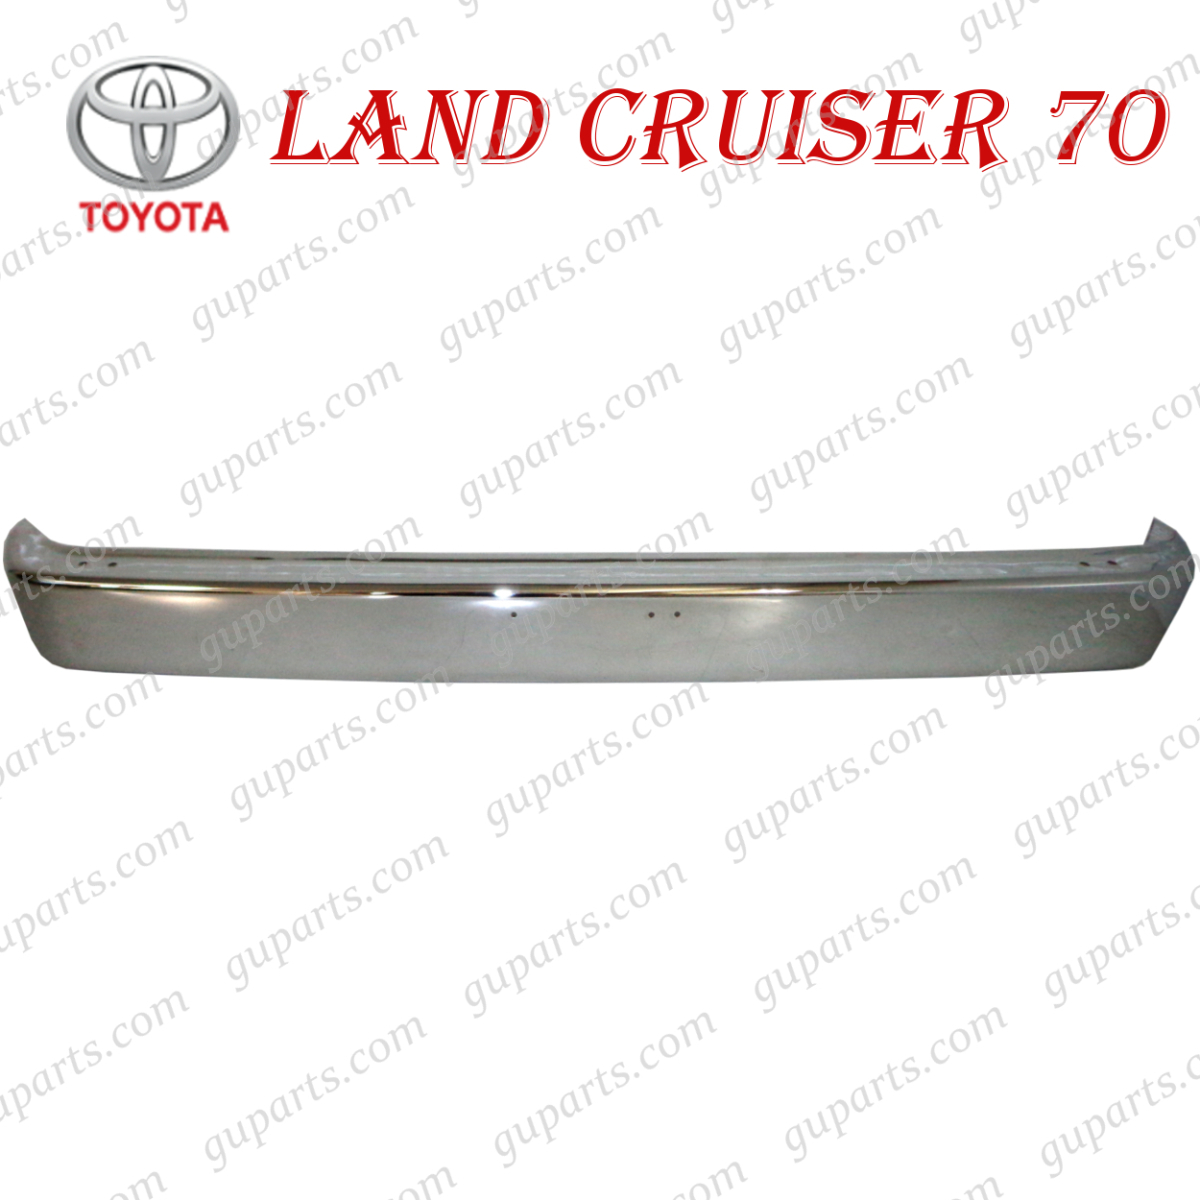  Toyota Land Cruiser 70 series front bumper chrome plating after market H2/1~H16/8 PZJ70 PZJ70V PZJ77V 52101-60090 53301-60100